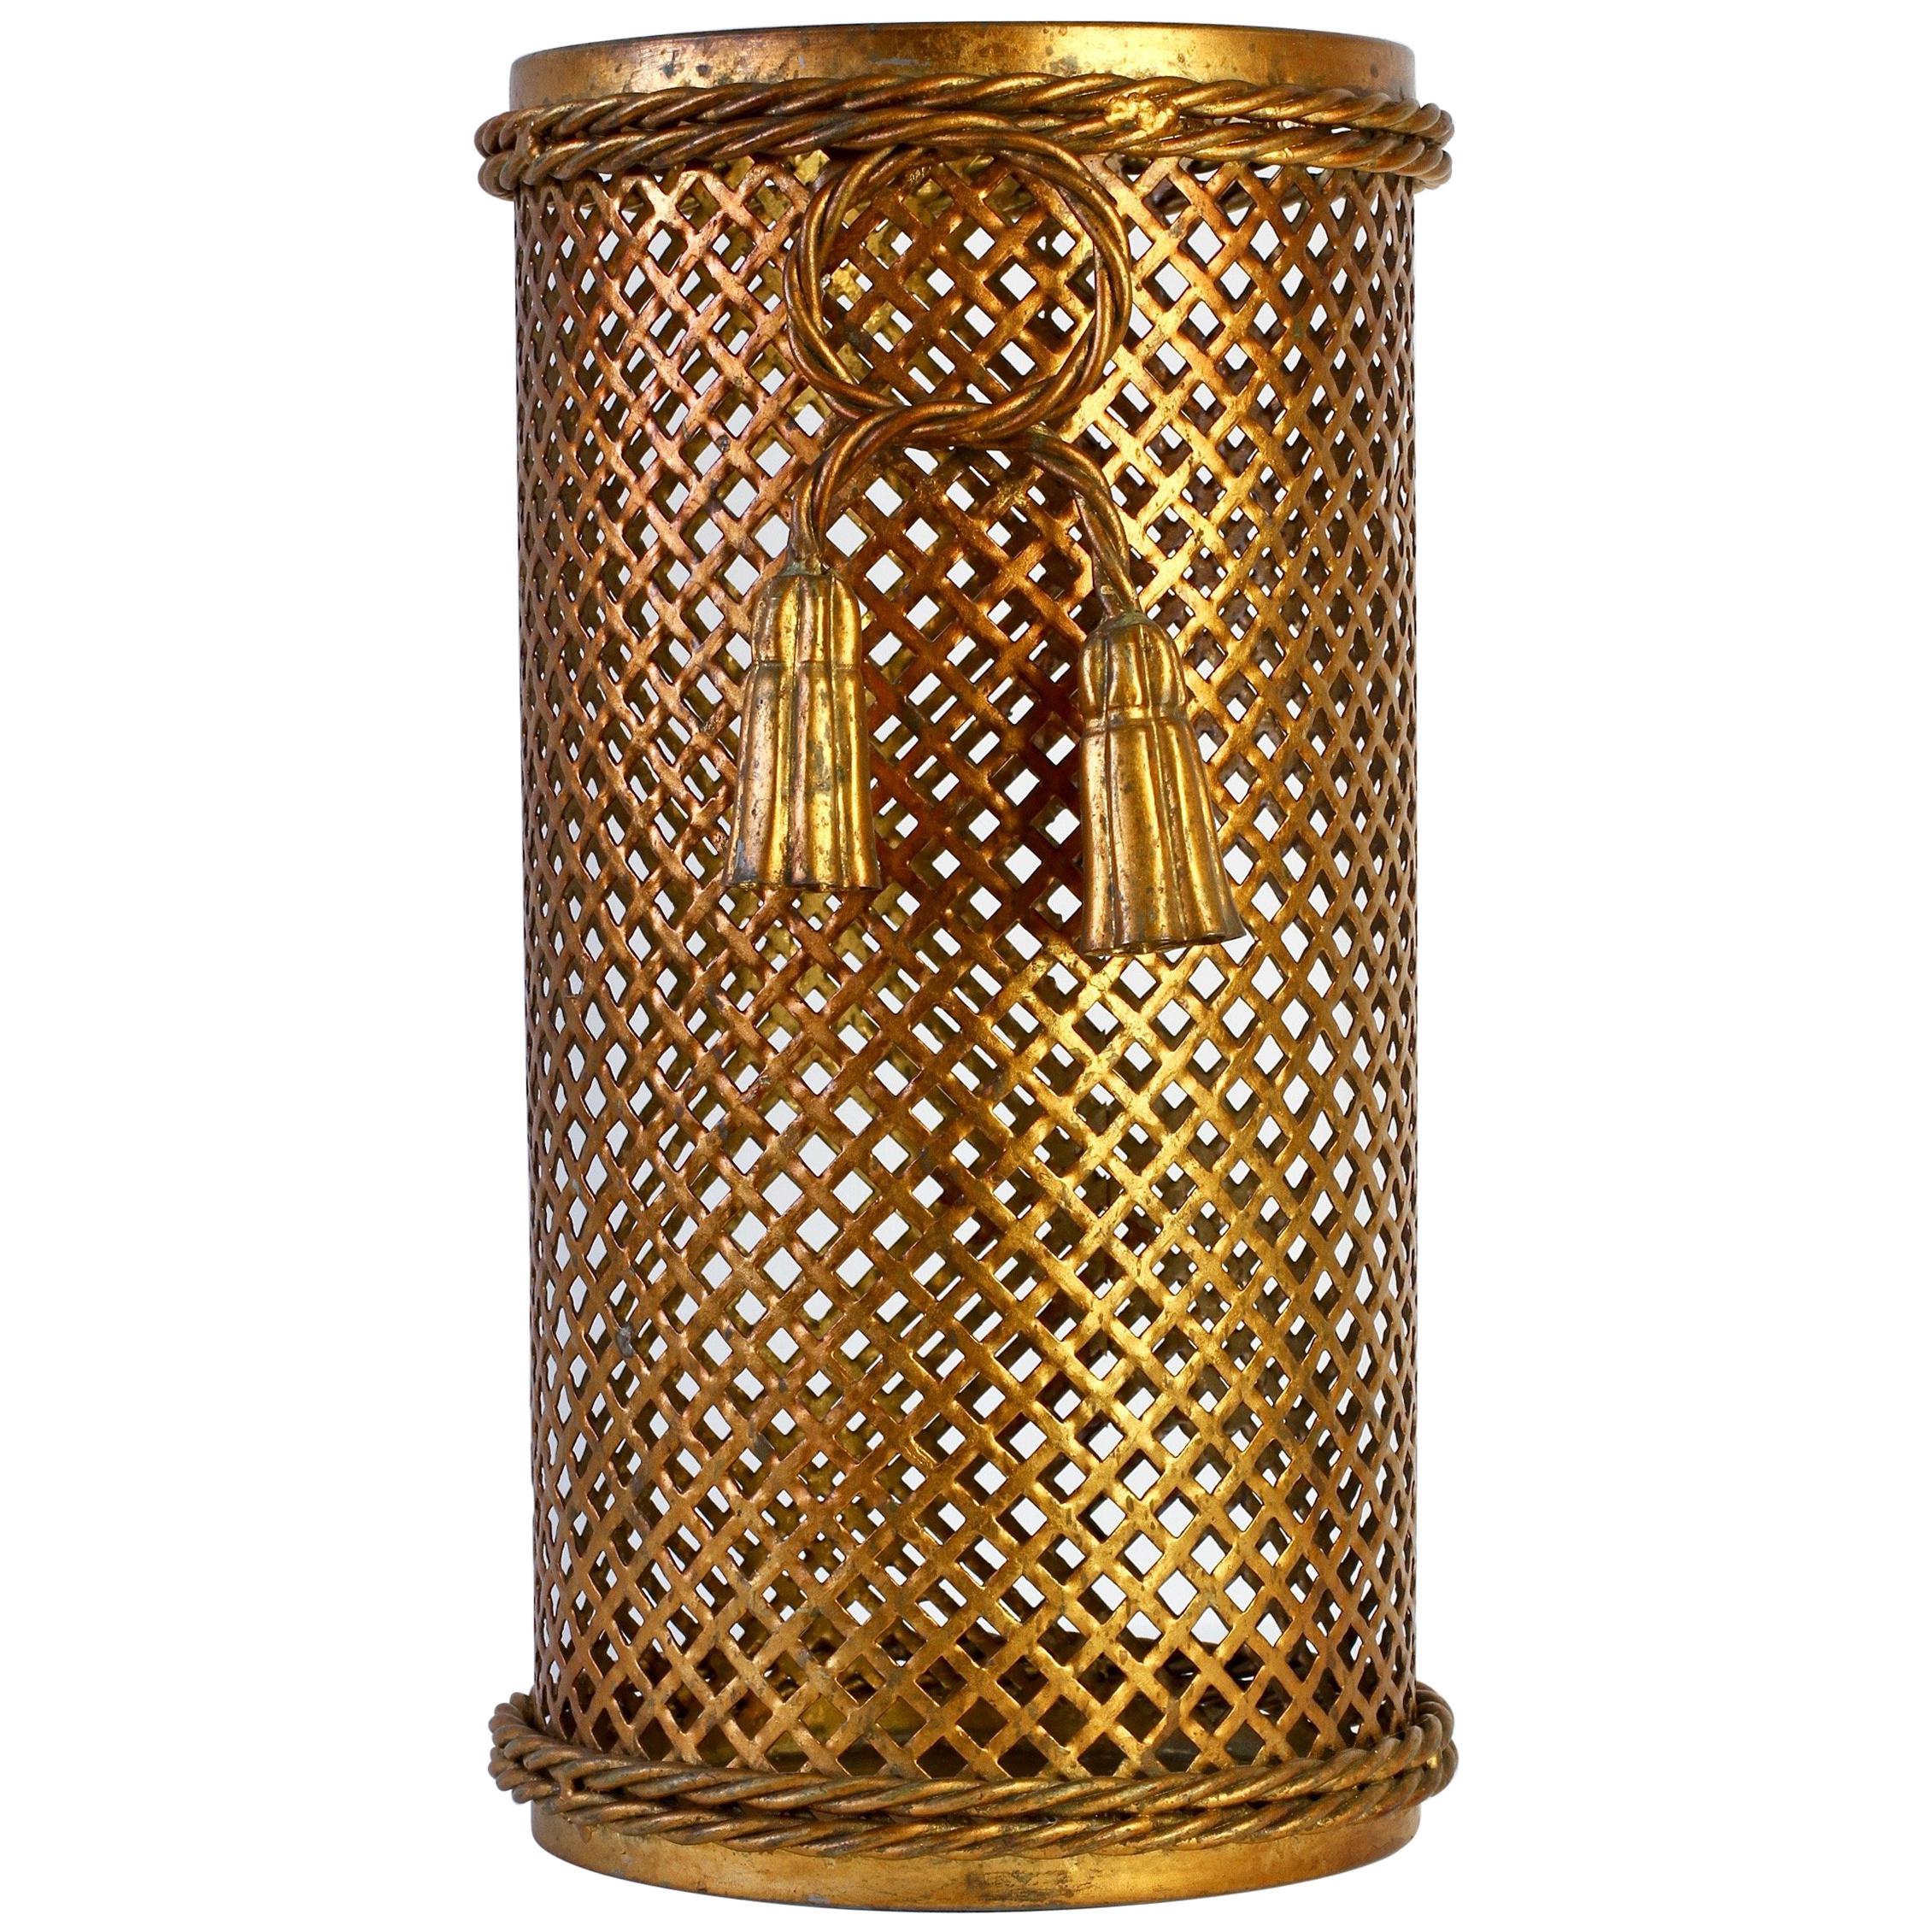 1950s Italian Hollywood Regency Gold Gilded Umbrella Stand or Waste Paper Basket